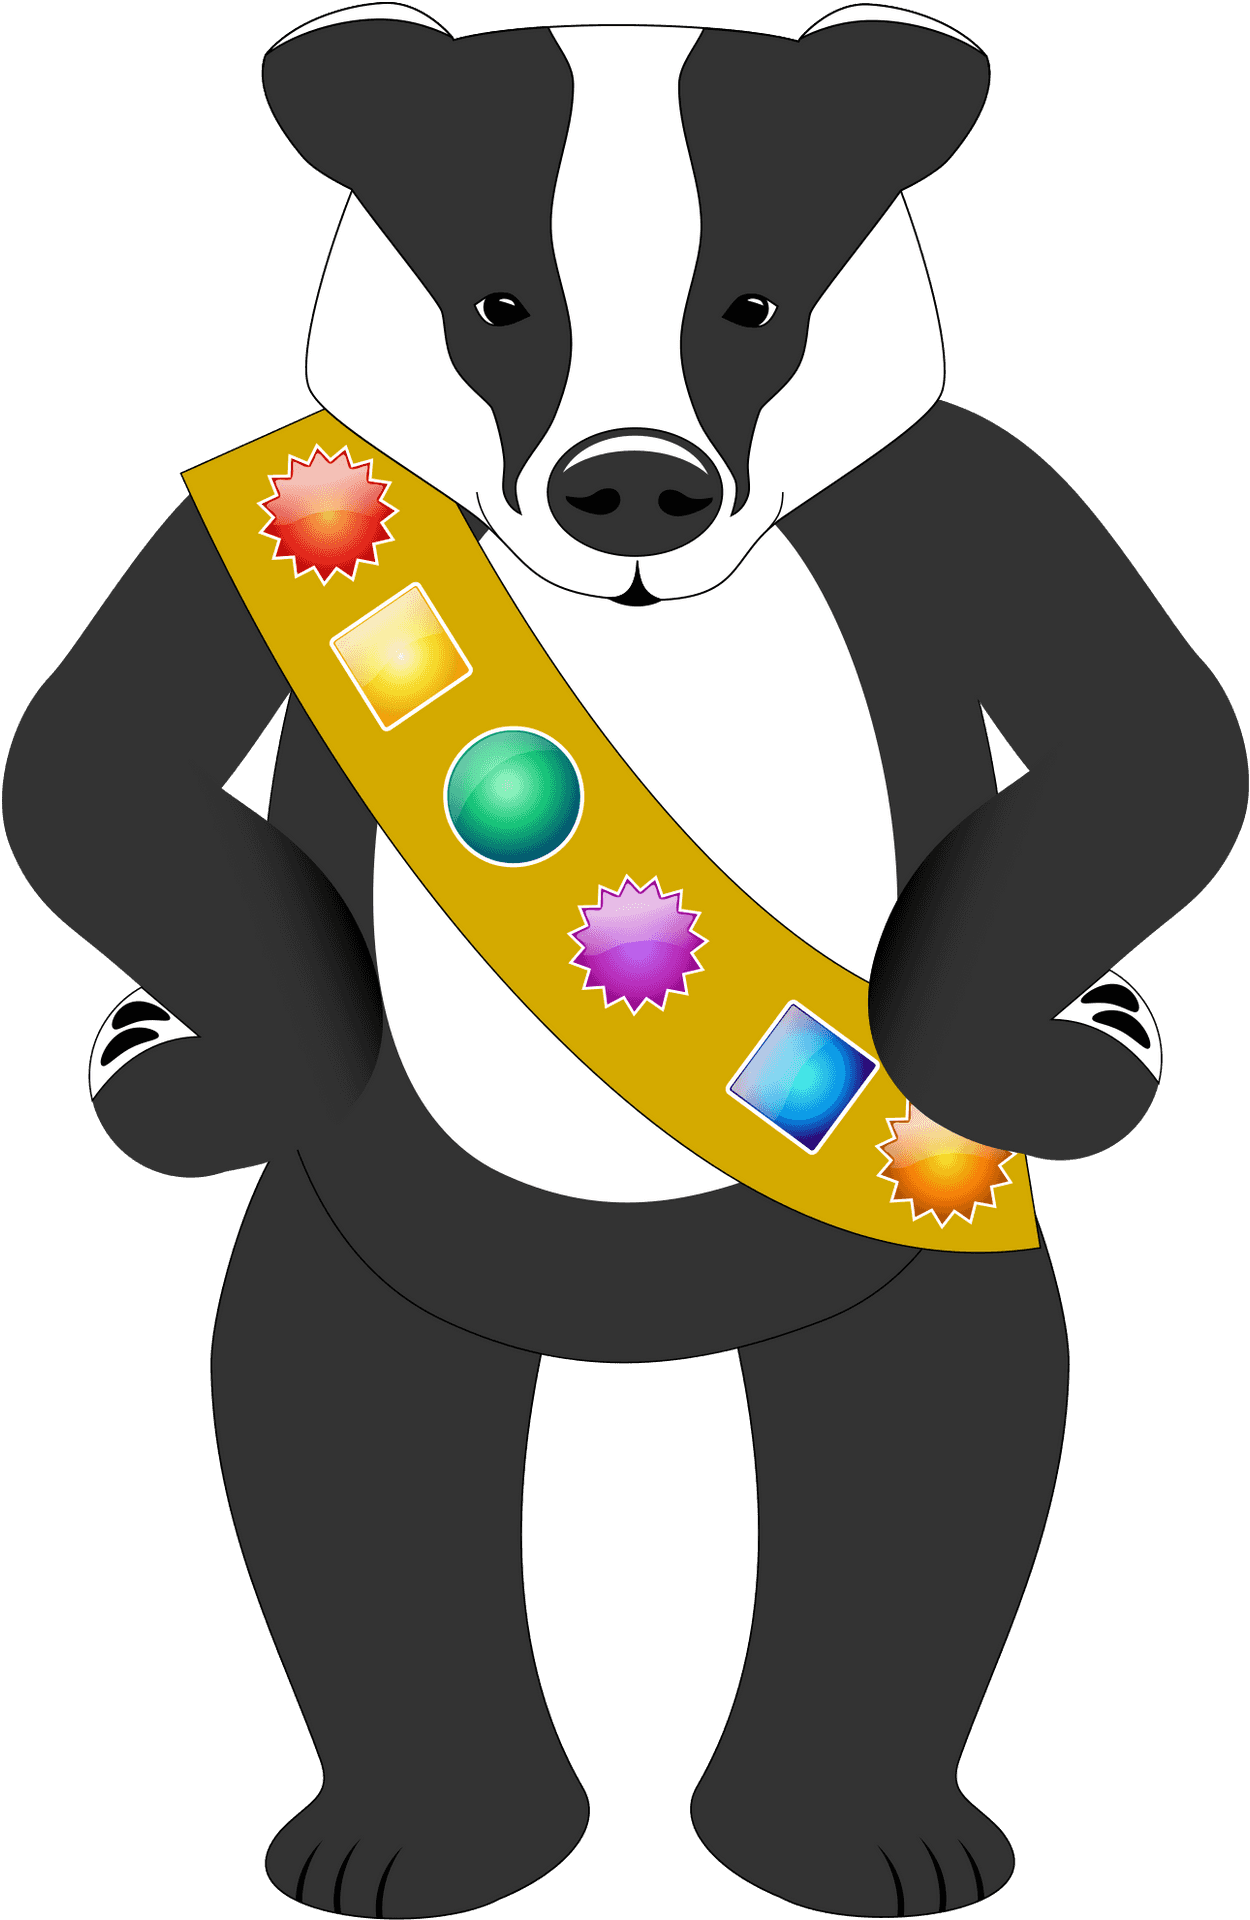 Cartoon Badger With Sash Illustration PNG image